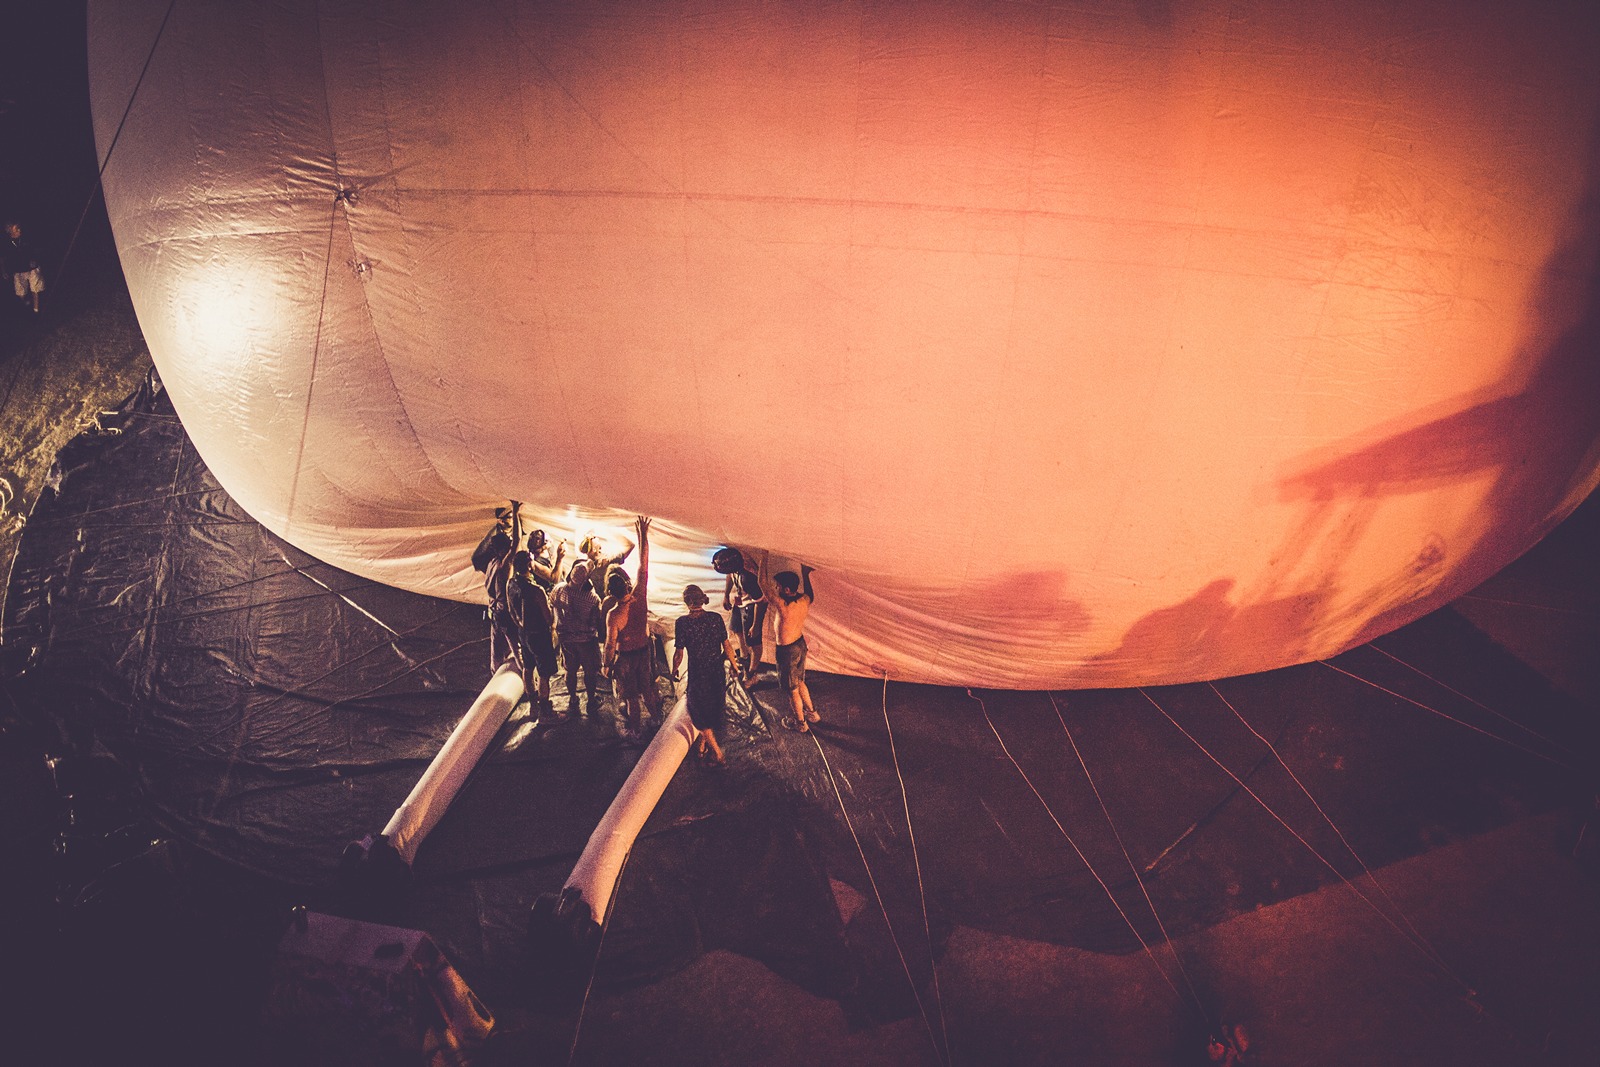 Burning Man - The biggest sphere